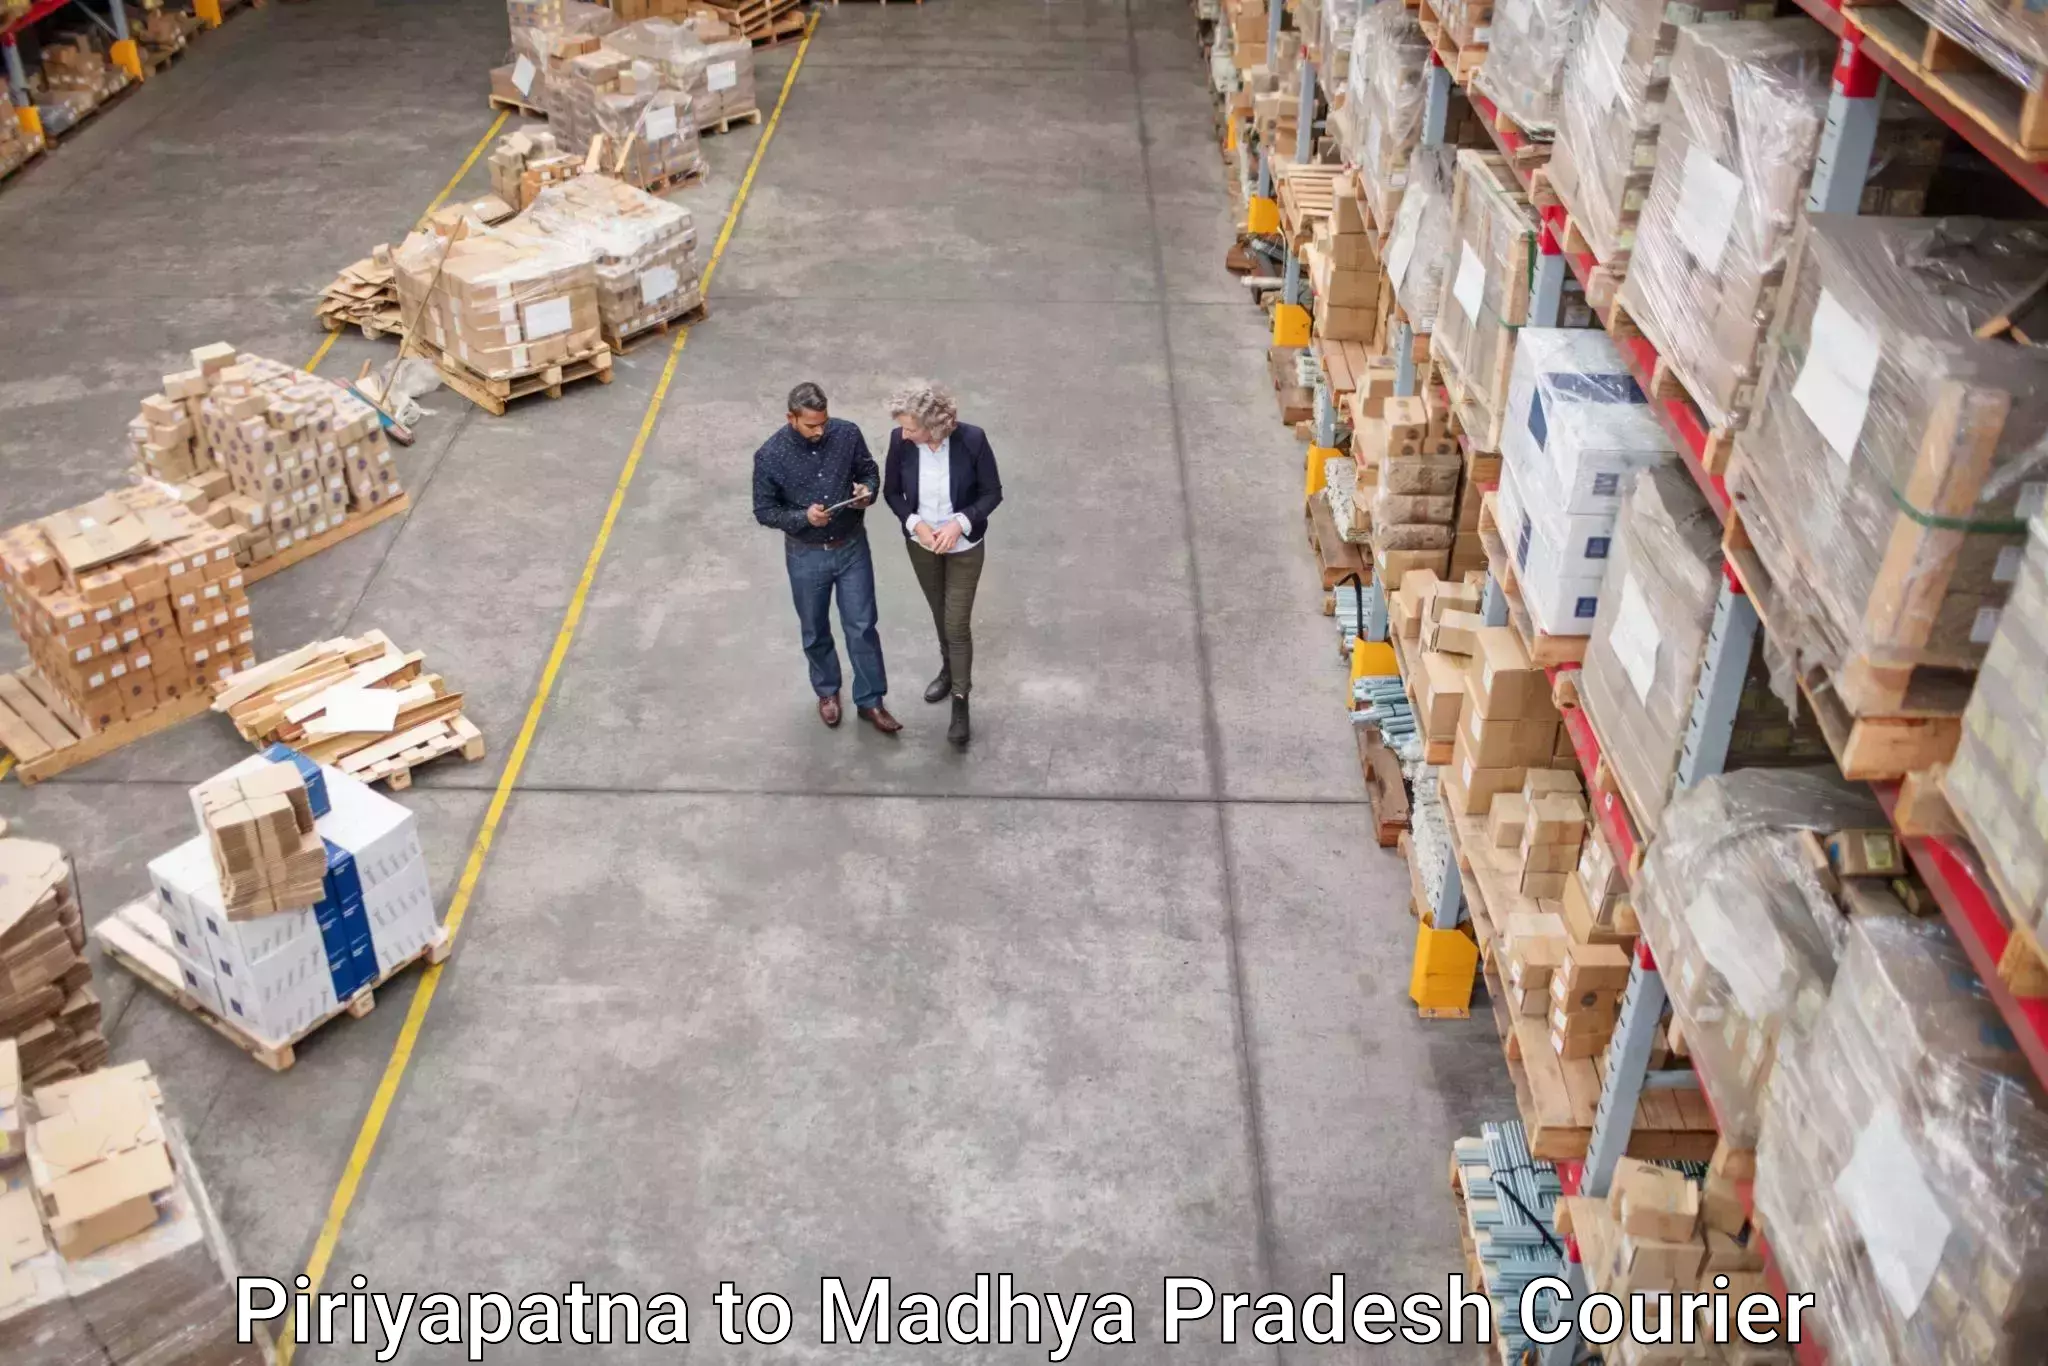 Customer-focused courier Piriyapatna to Dewas